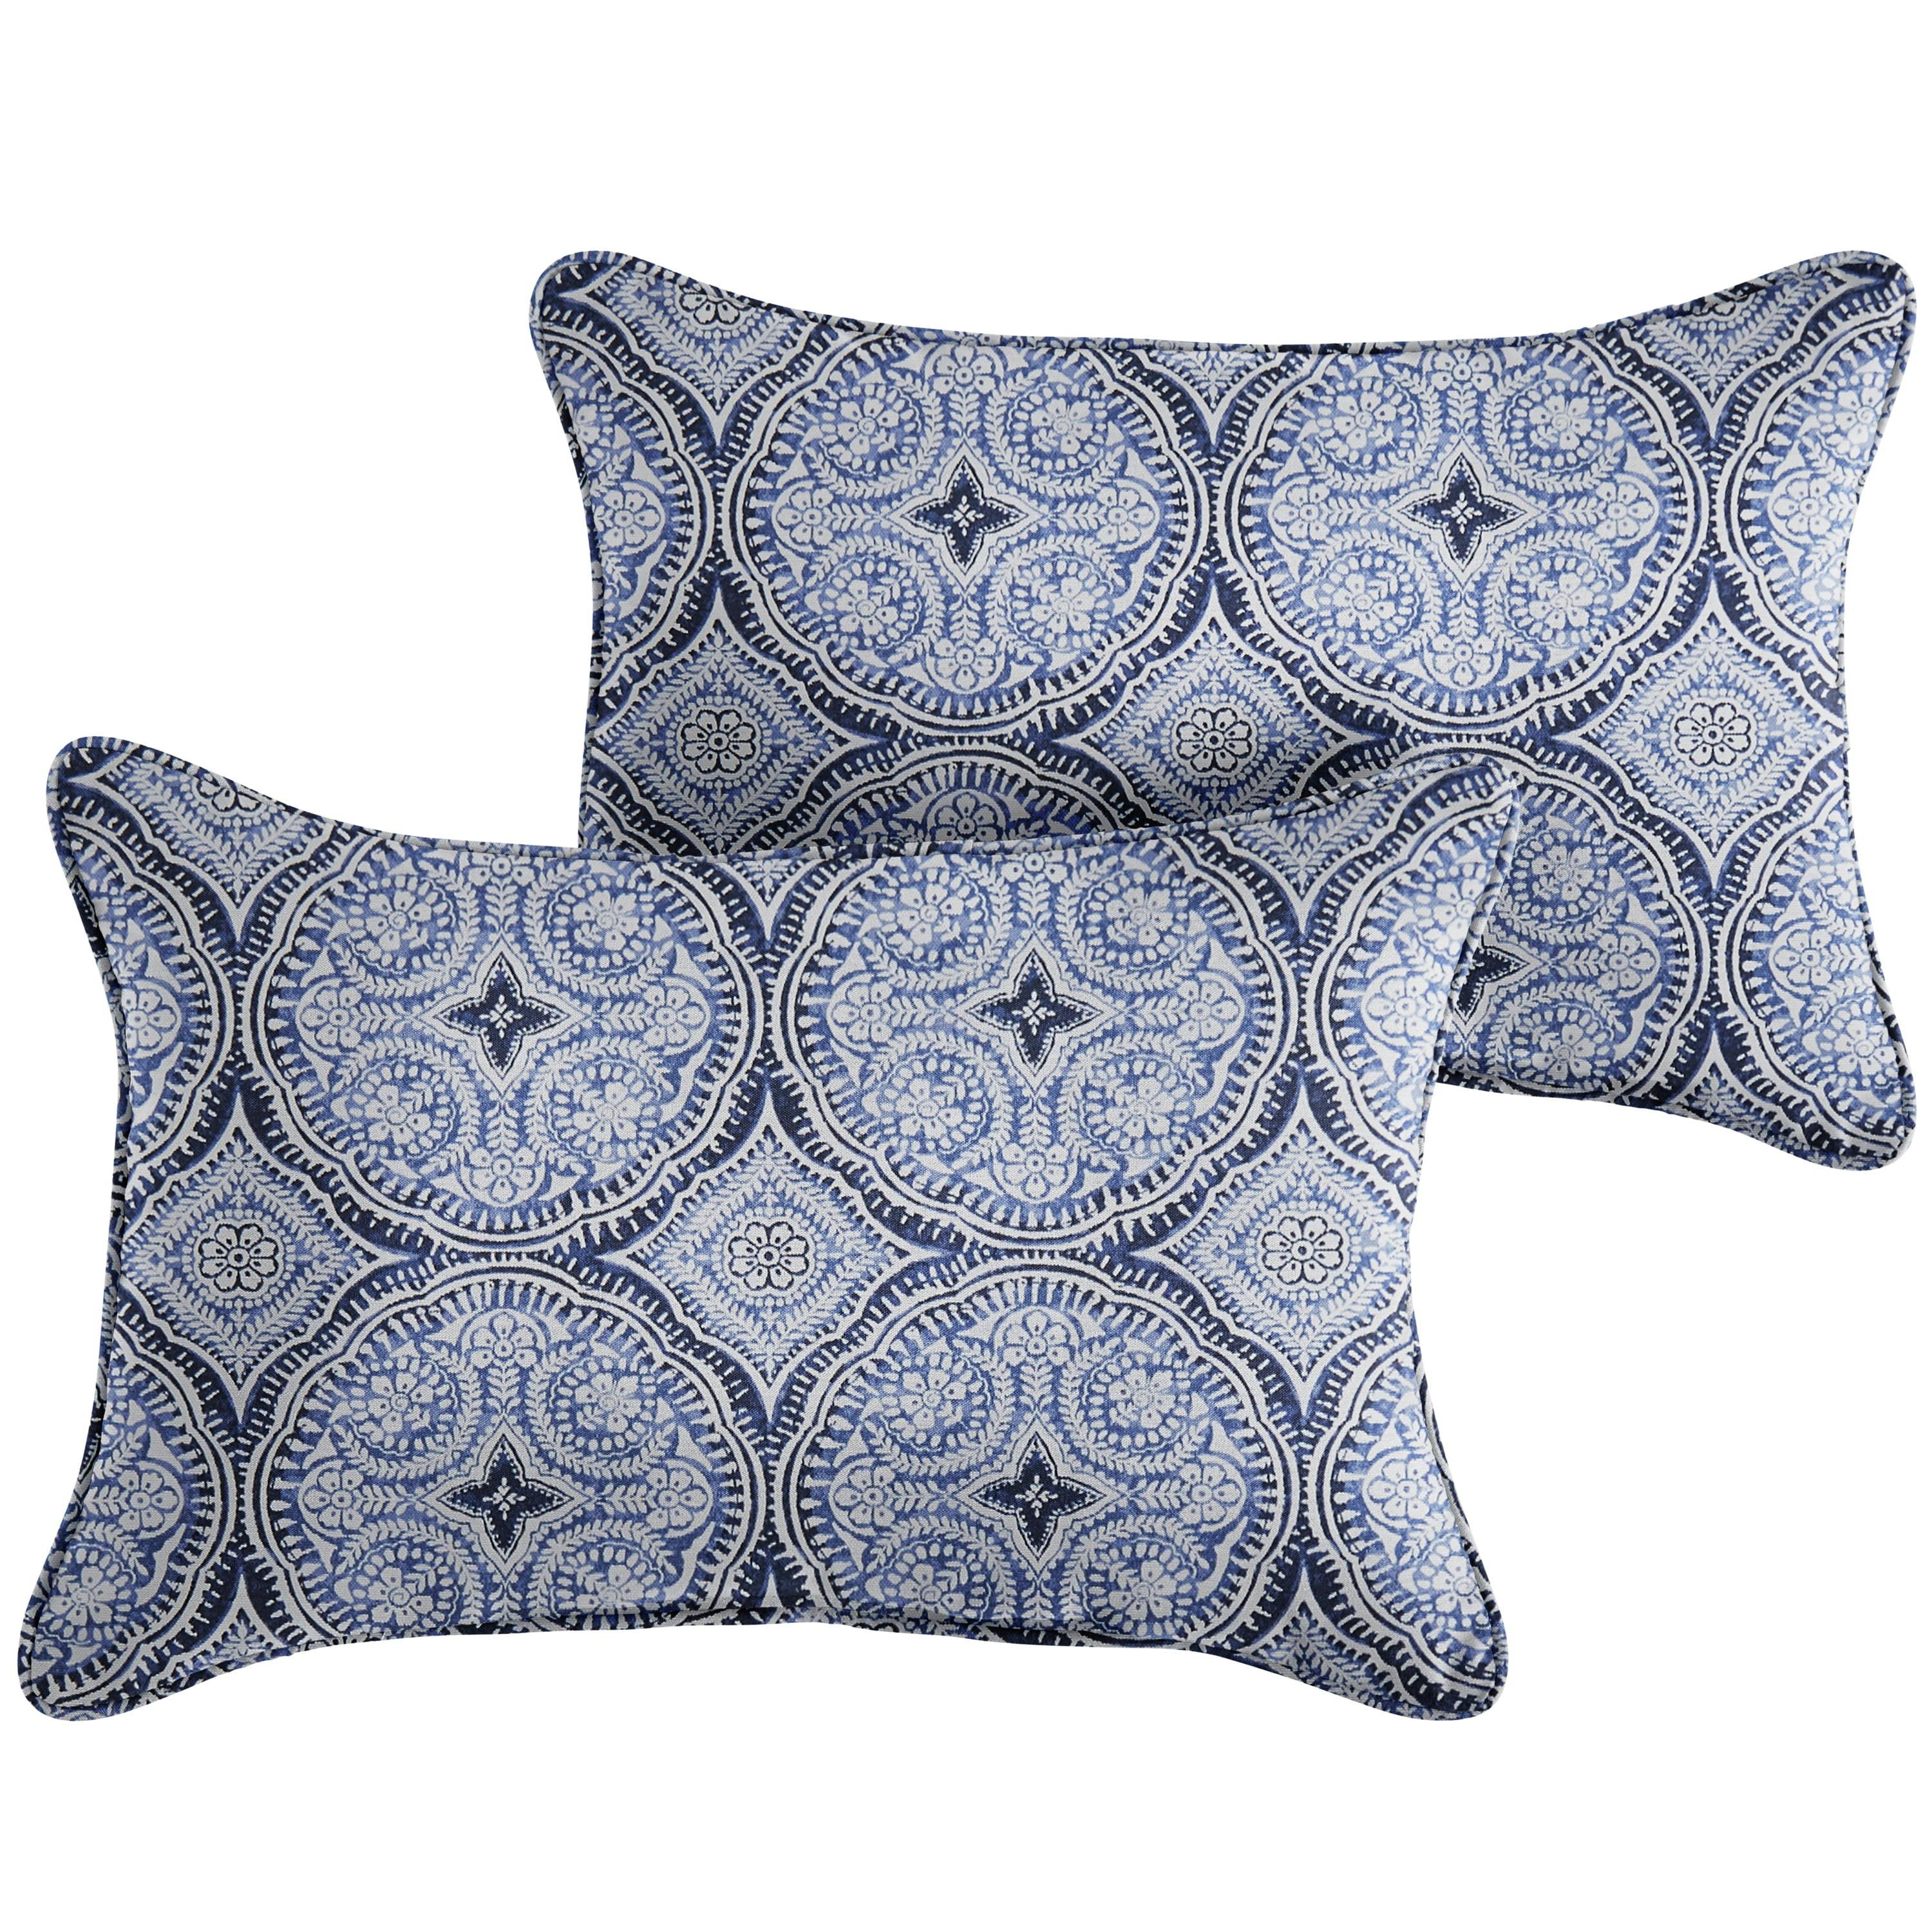 Blue Jean Corded Rectangular Indoor/Outdoor Lumbar Pillows, 20-inch Set of 2